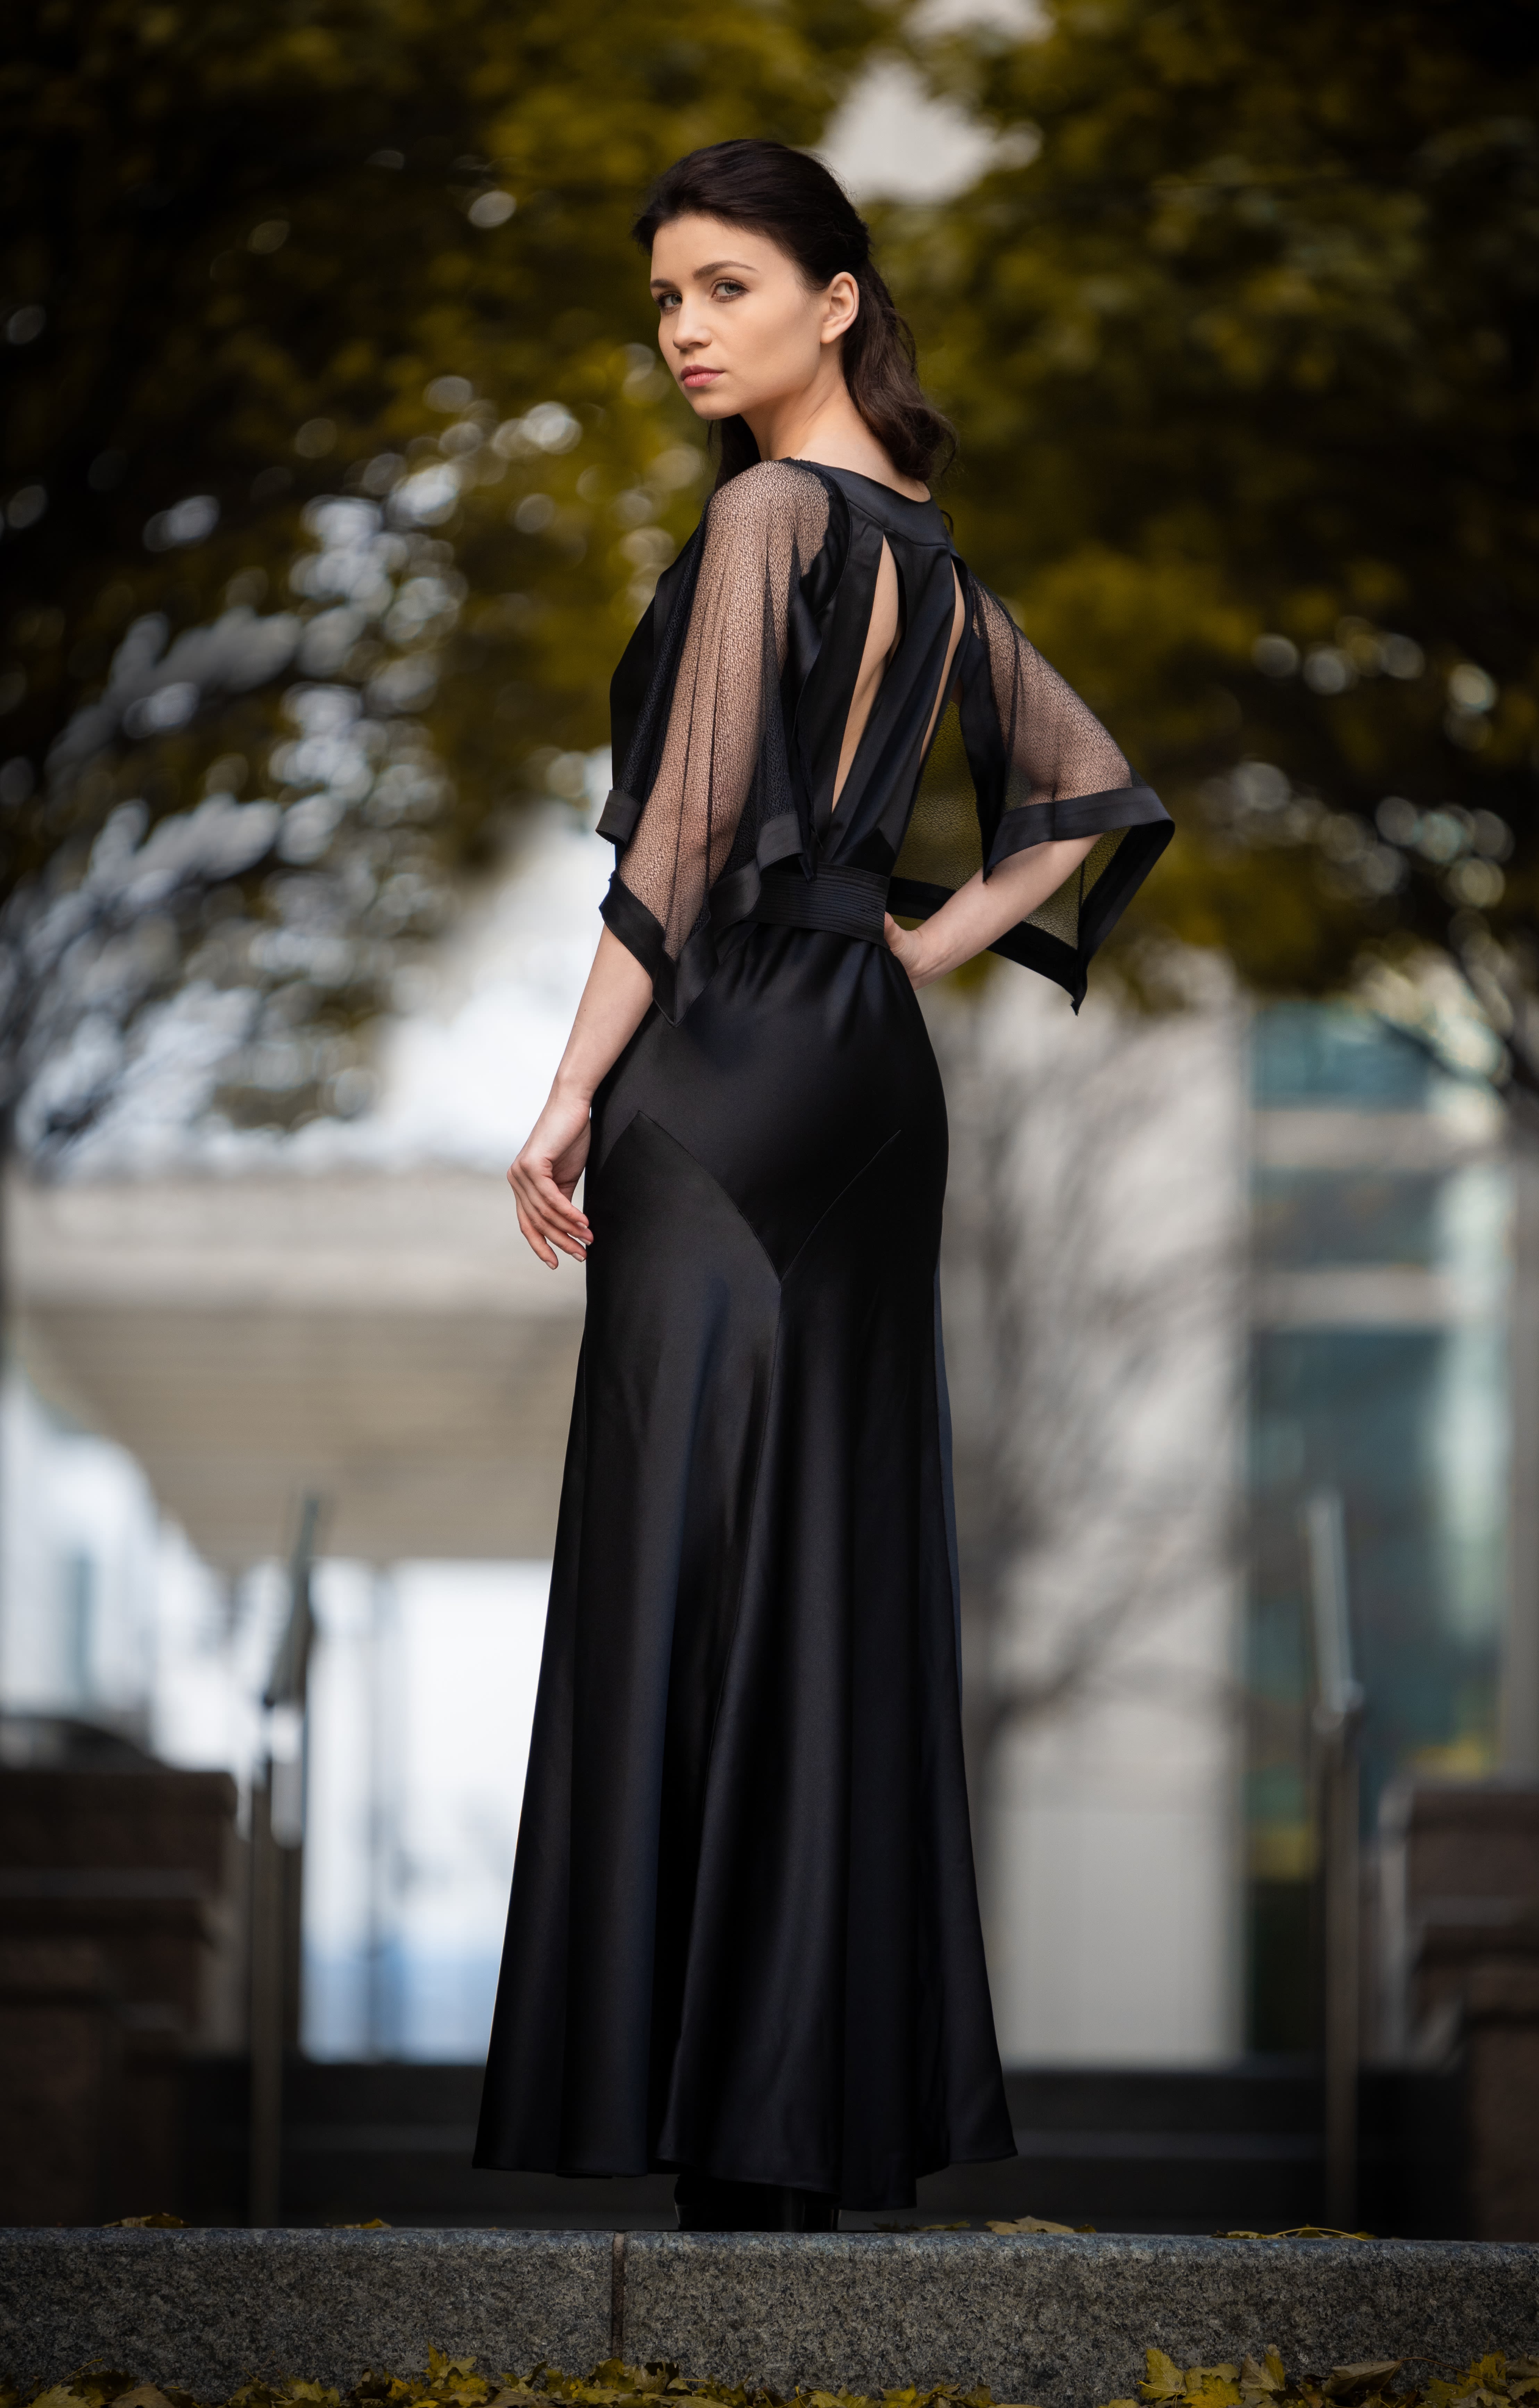 Person in a black dress